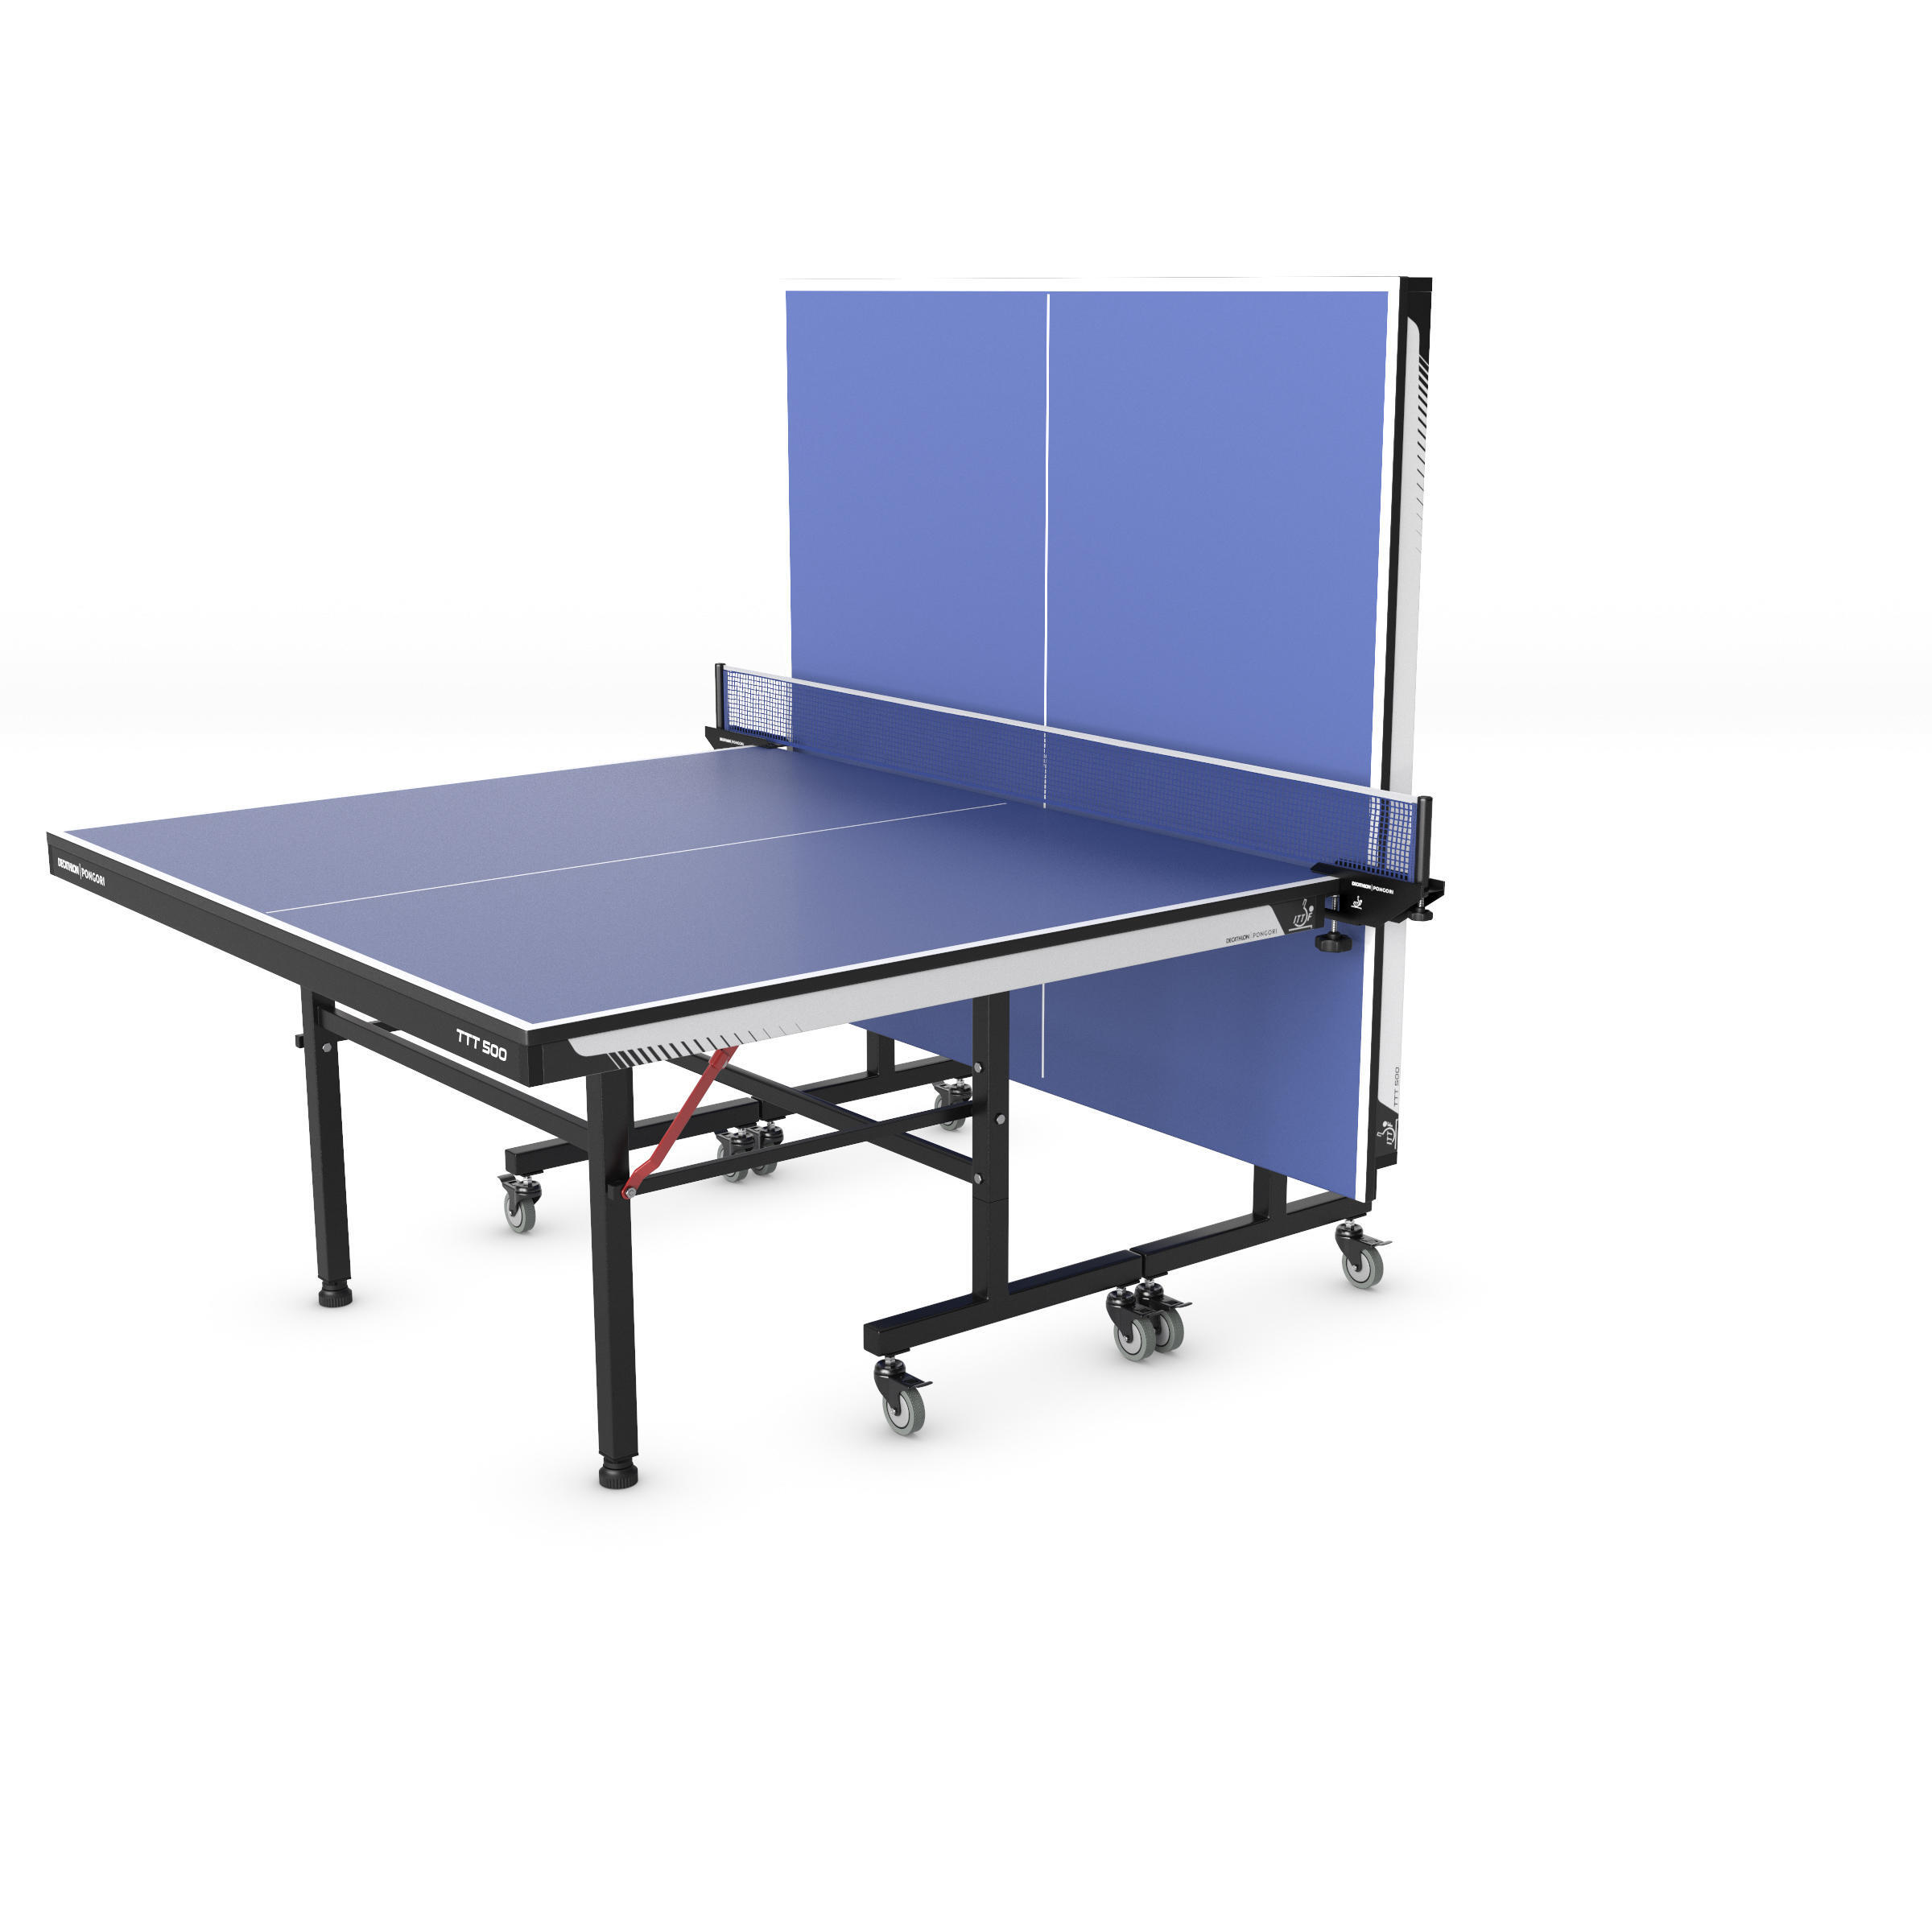 ITTF Approved Club Table Tennis Table TTT 500 4/13